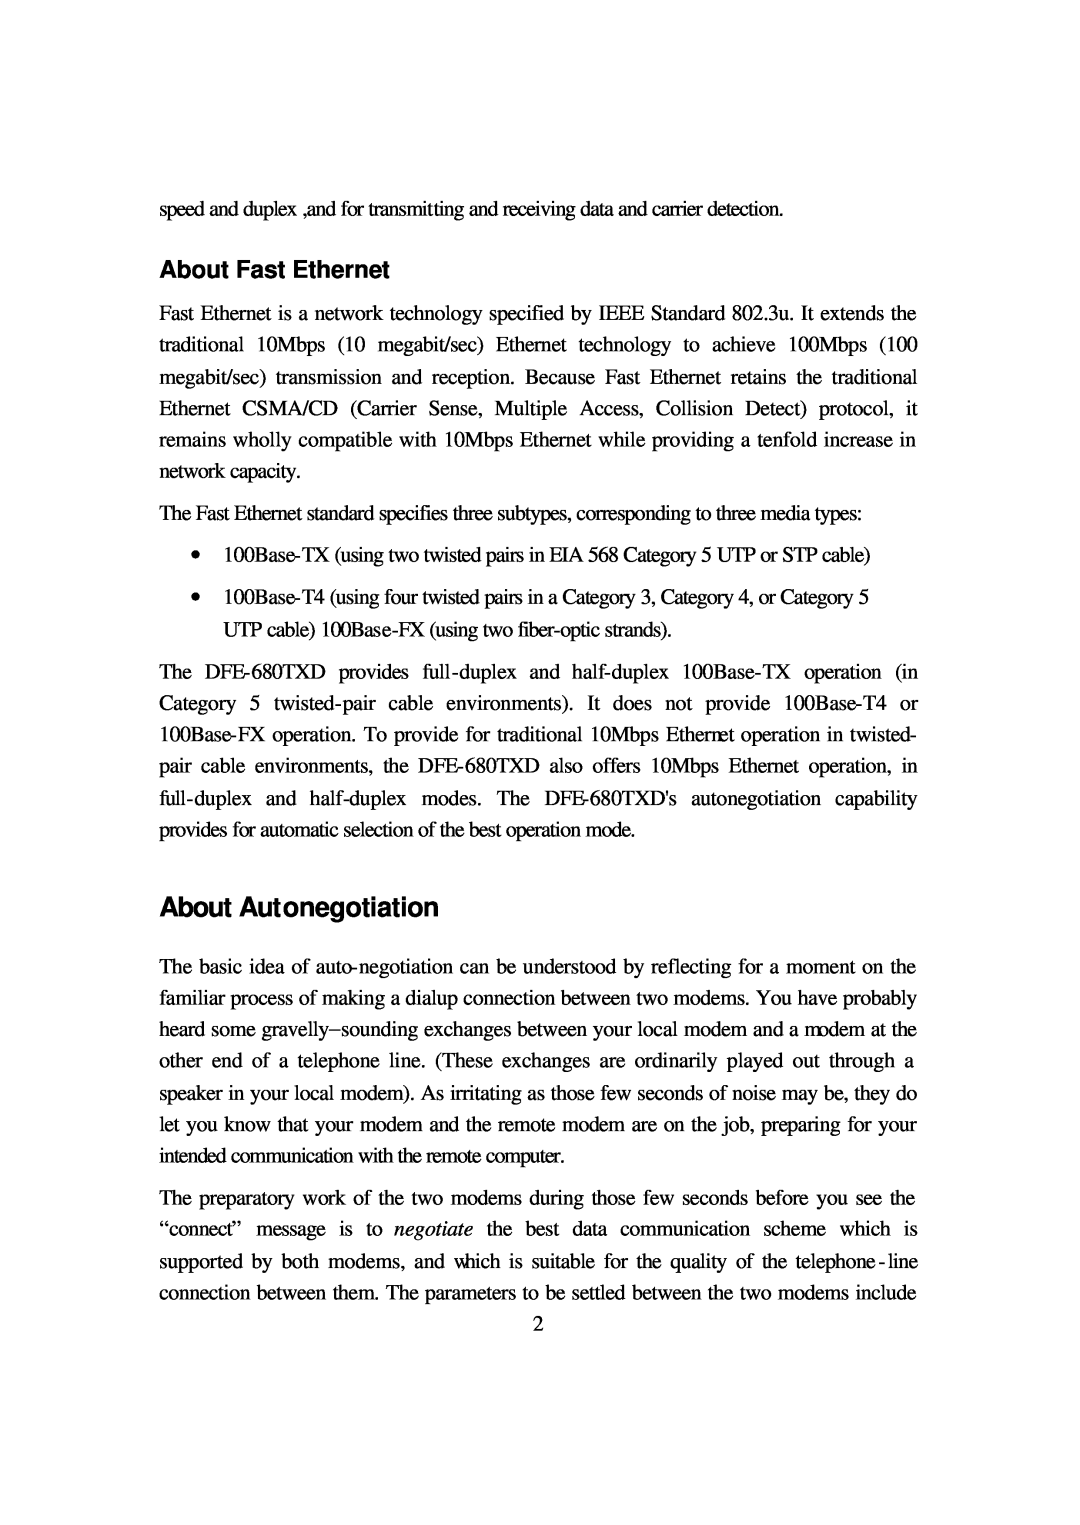 D-Link DFE-680TXD manual About Autonegotiation, About Fast Ethernet 